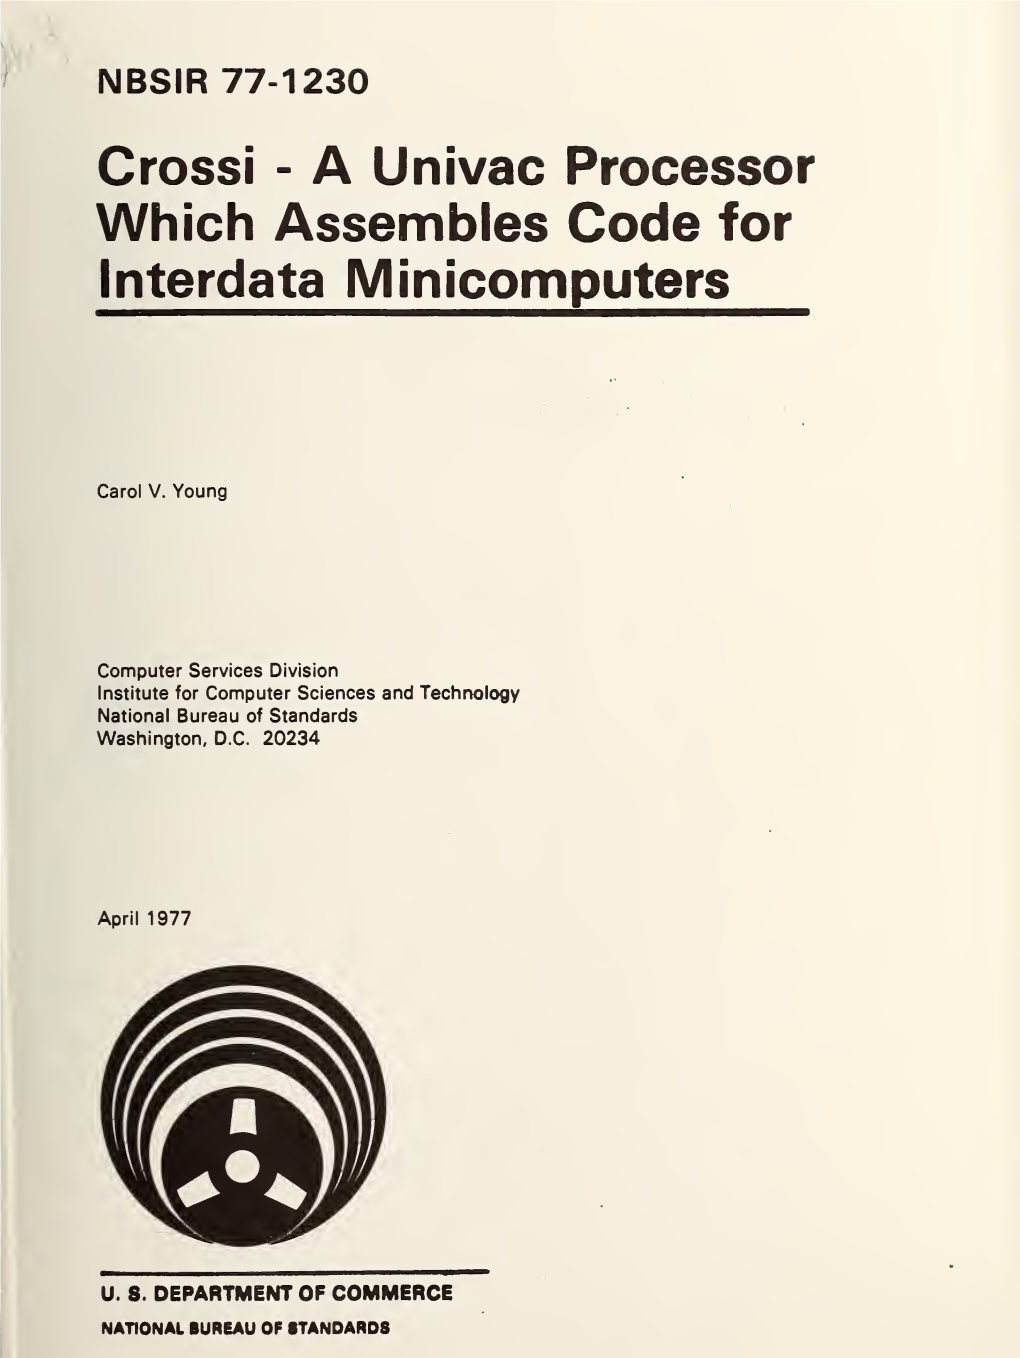 A Univac Processor Which Assembles Code for Interdata Minicomputers